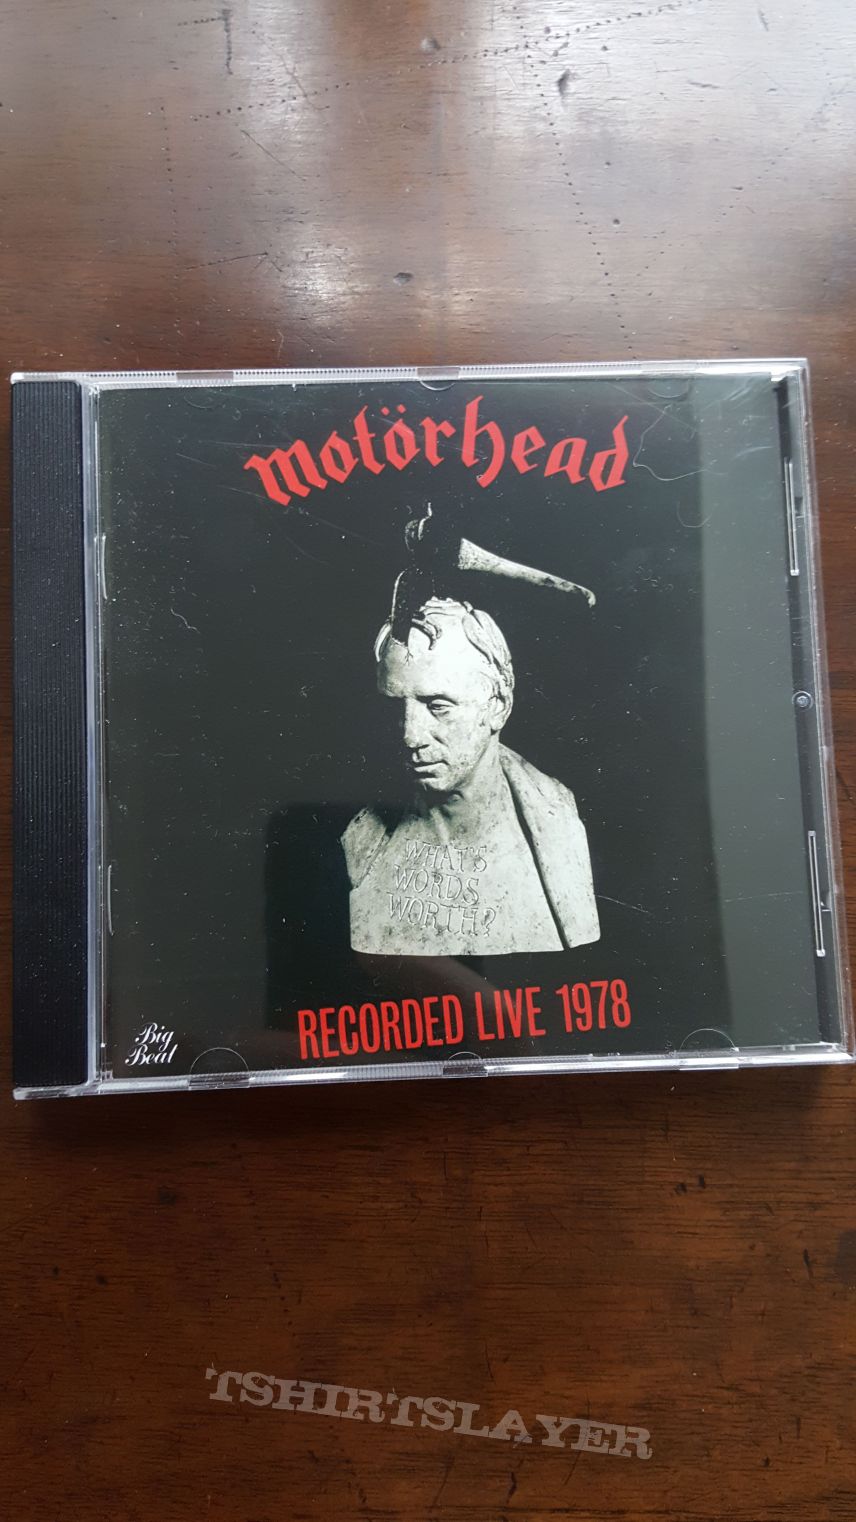 Motörhead - Whats Wordsworth?